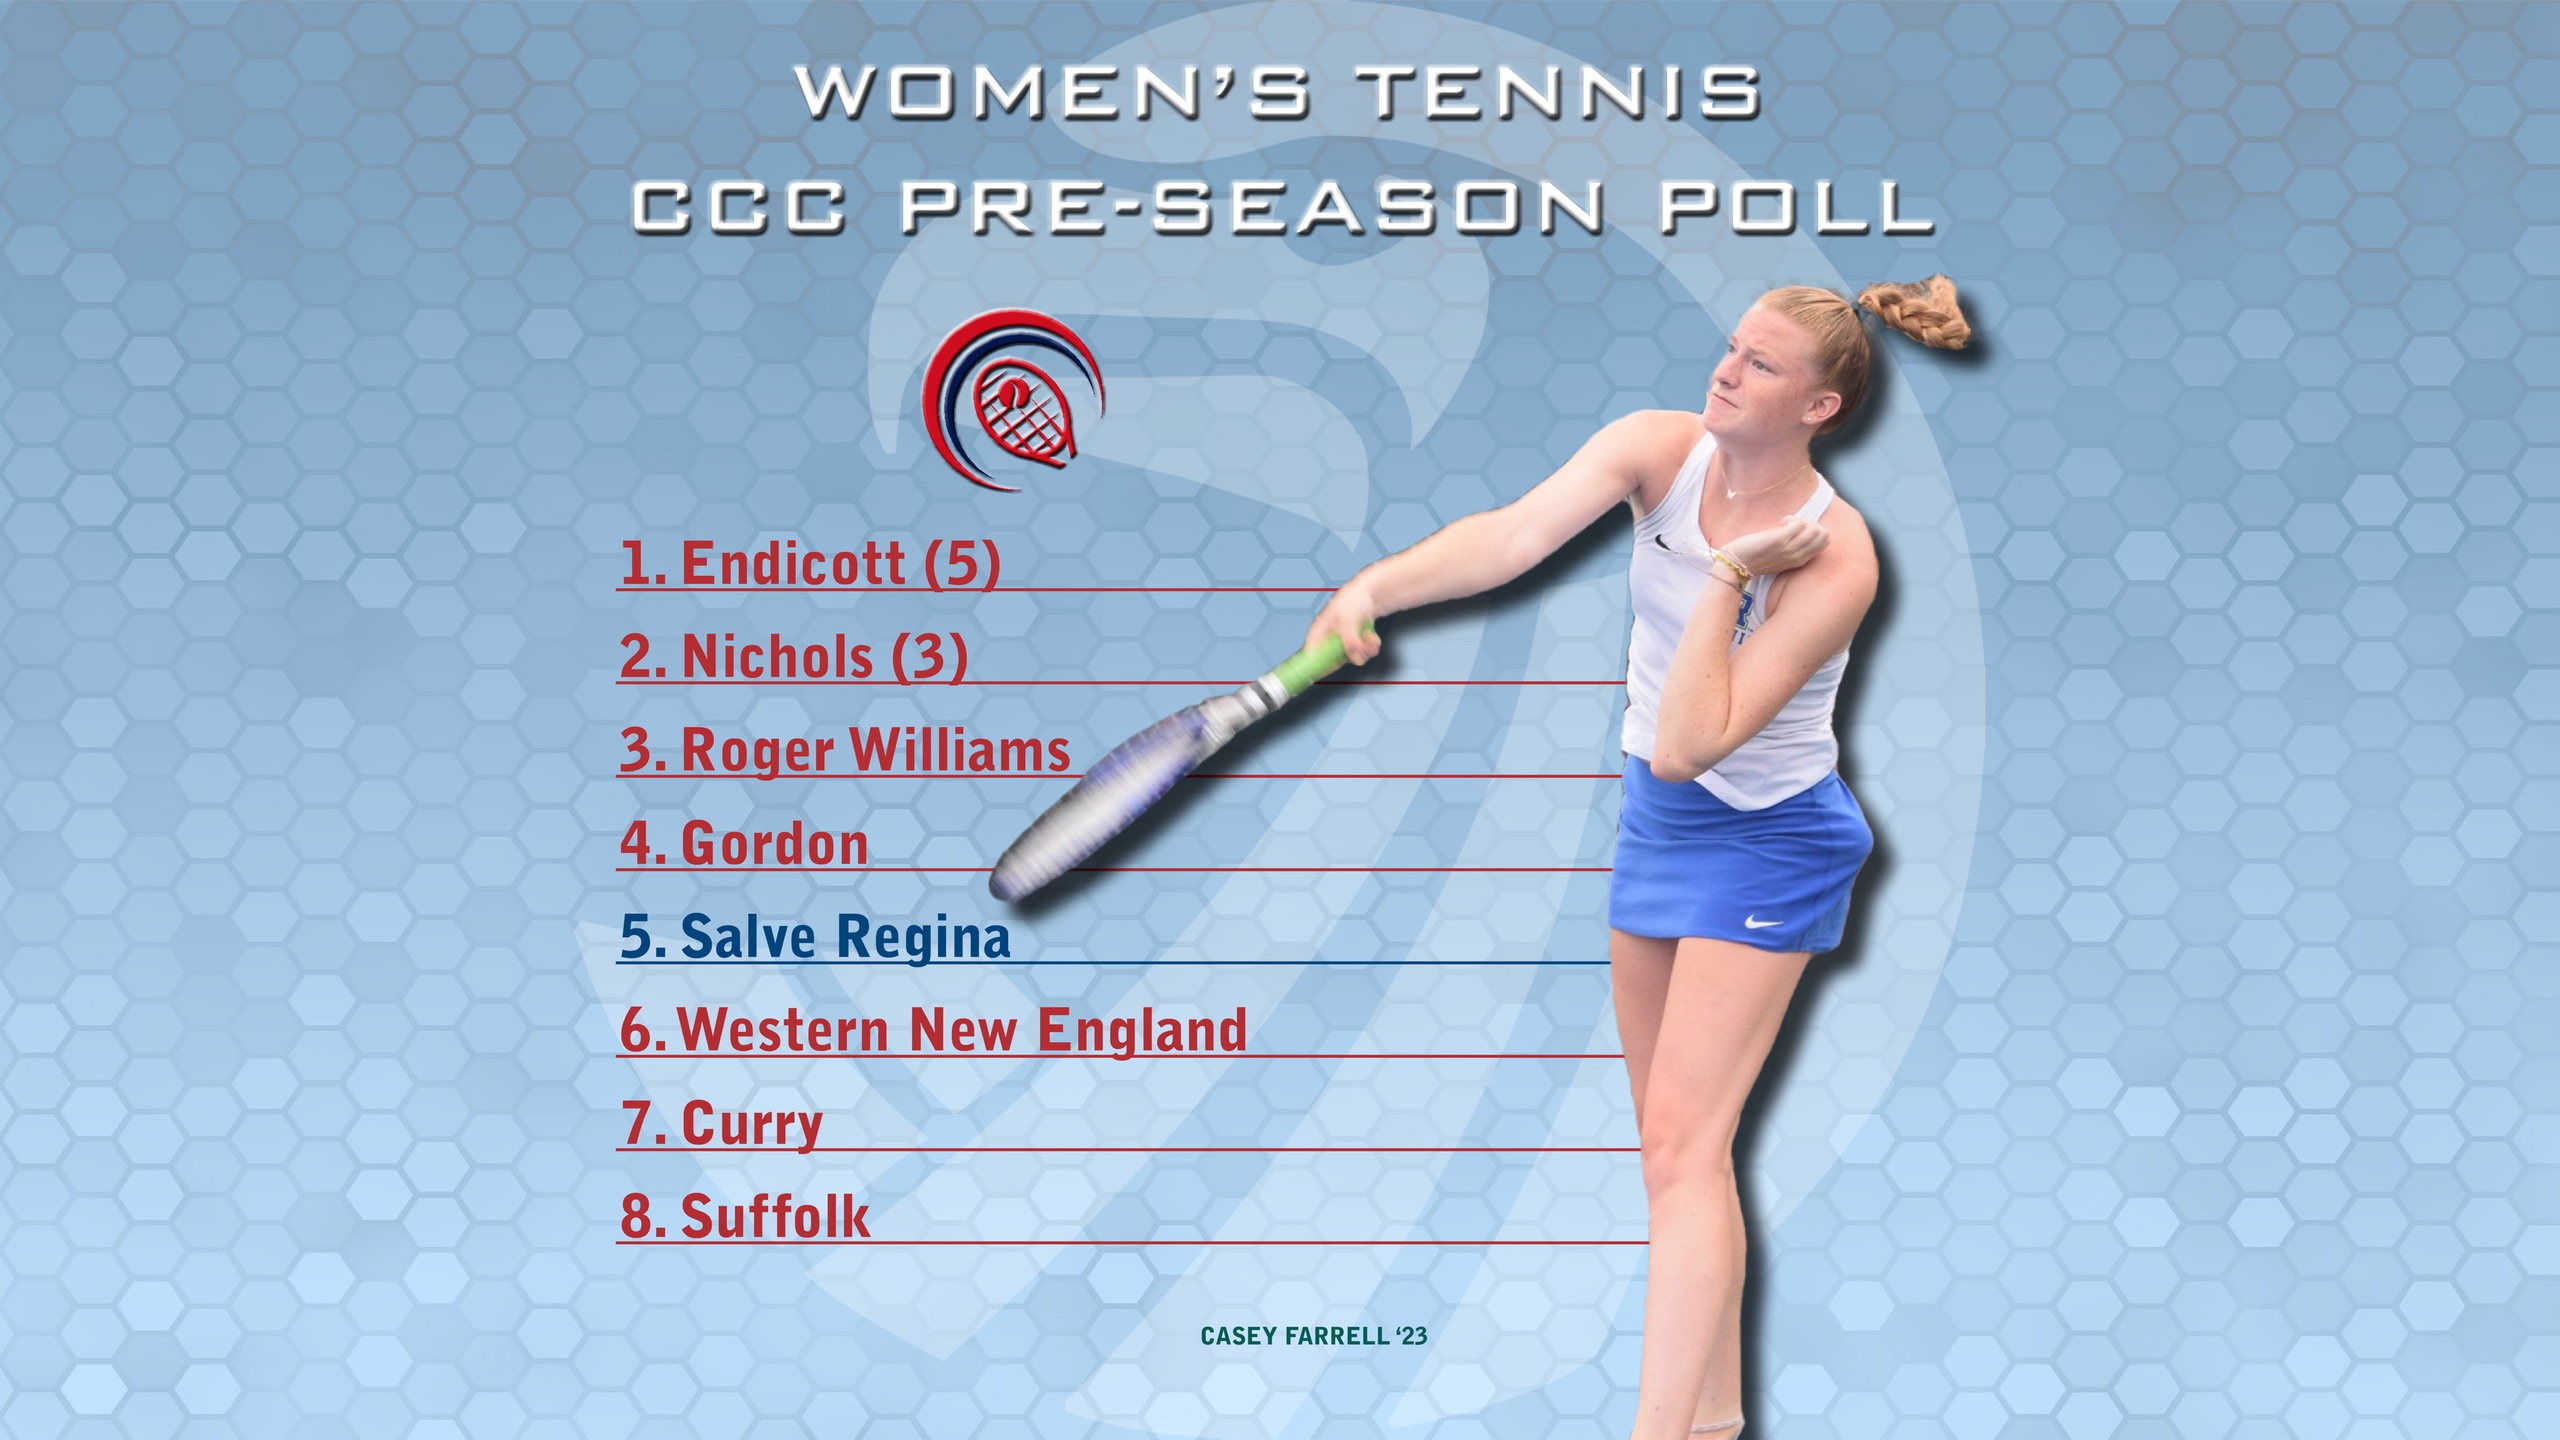 CCC Pre-Season Poll: Seahawks picked fifth in women's tennis